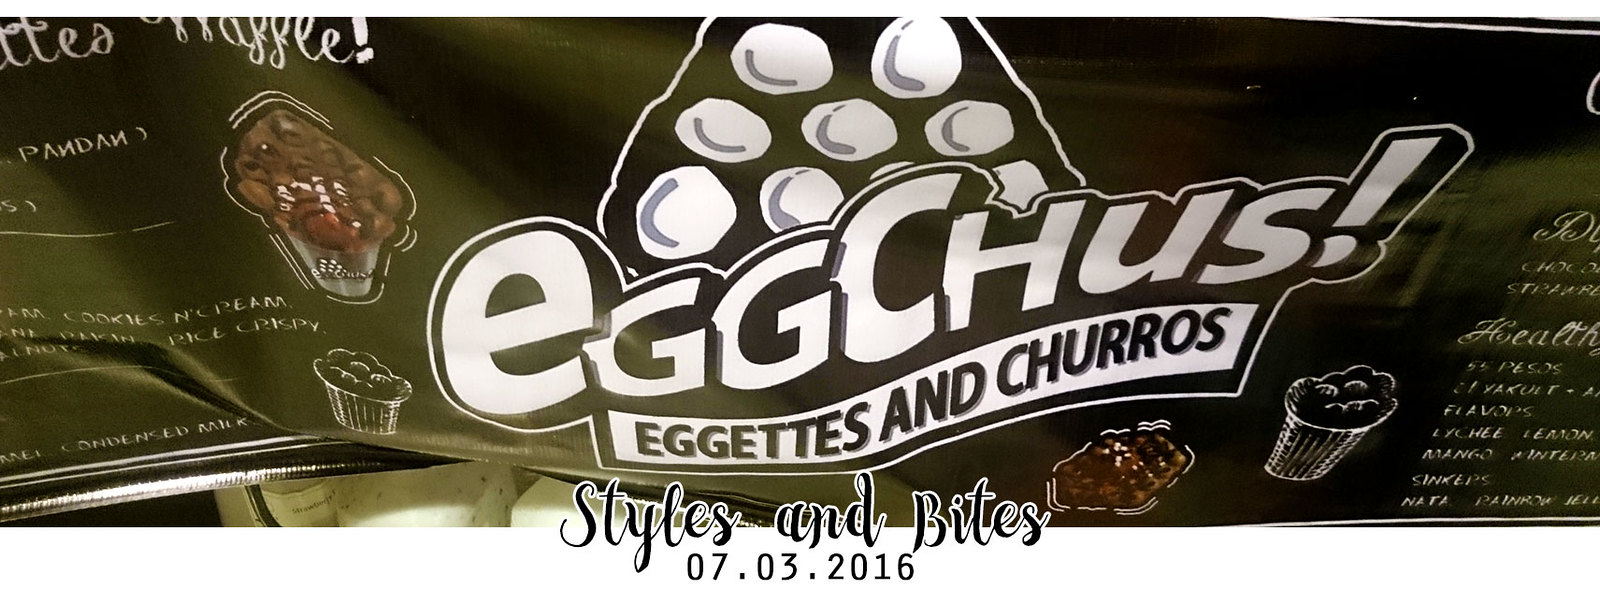 Eggchus | Styles and Bites 2016